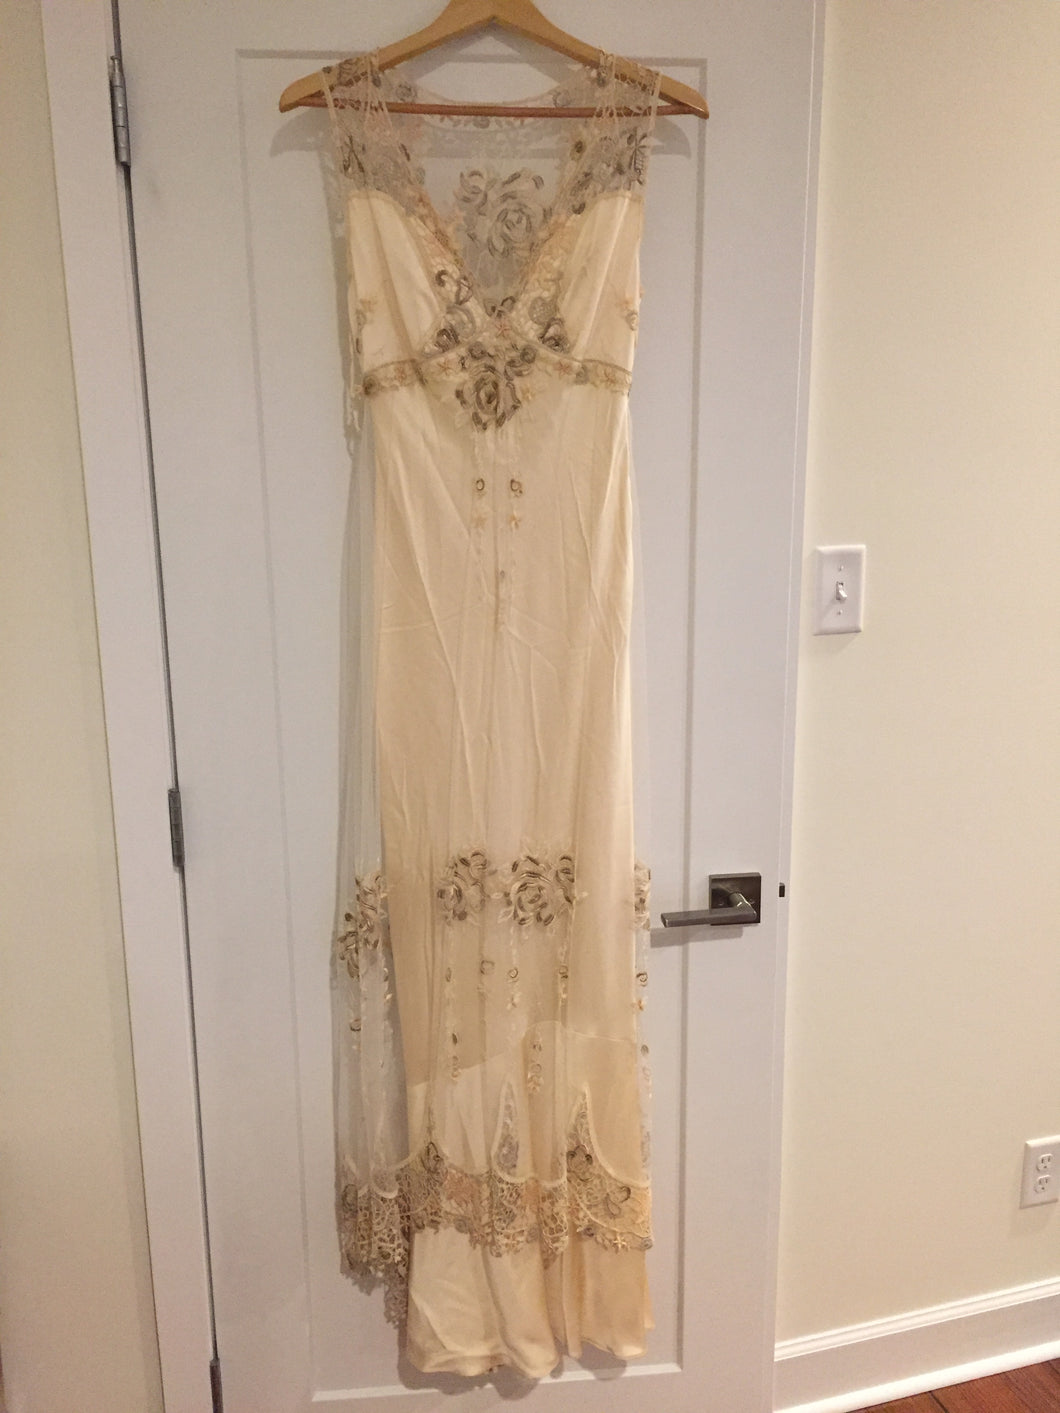 Clarie Pettibone 'Custom' size 6 used wedding dress front view on hanger